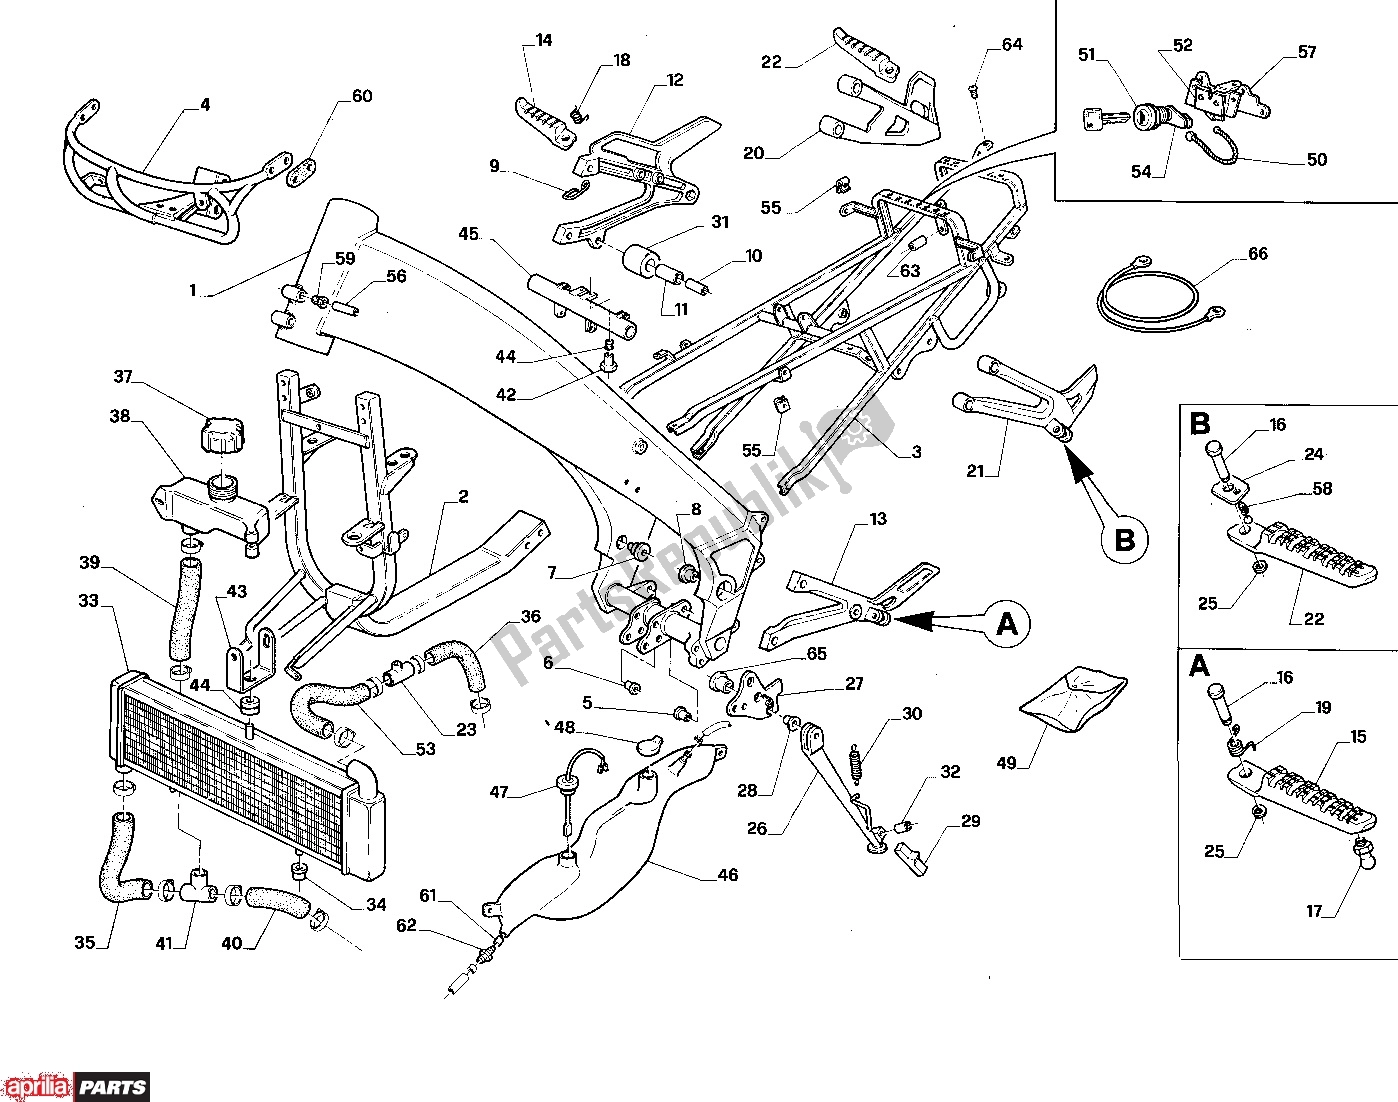 All parts for the Frame of the Aprilia AF1 312 125 1990 - 1995